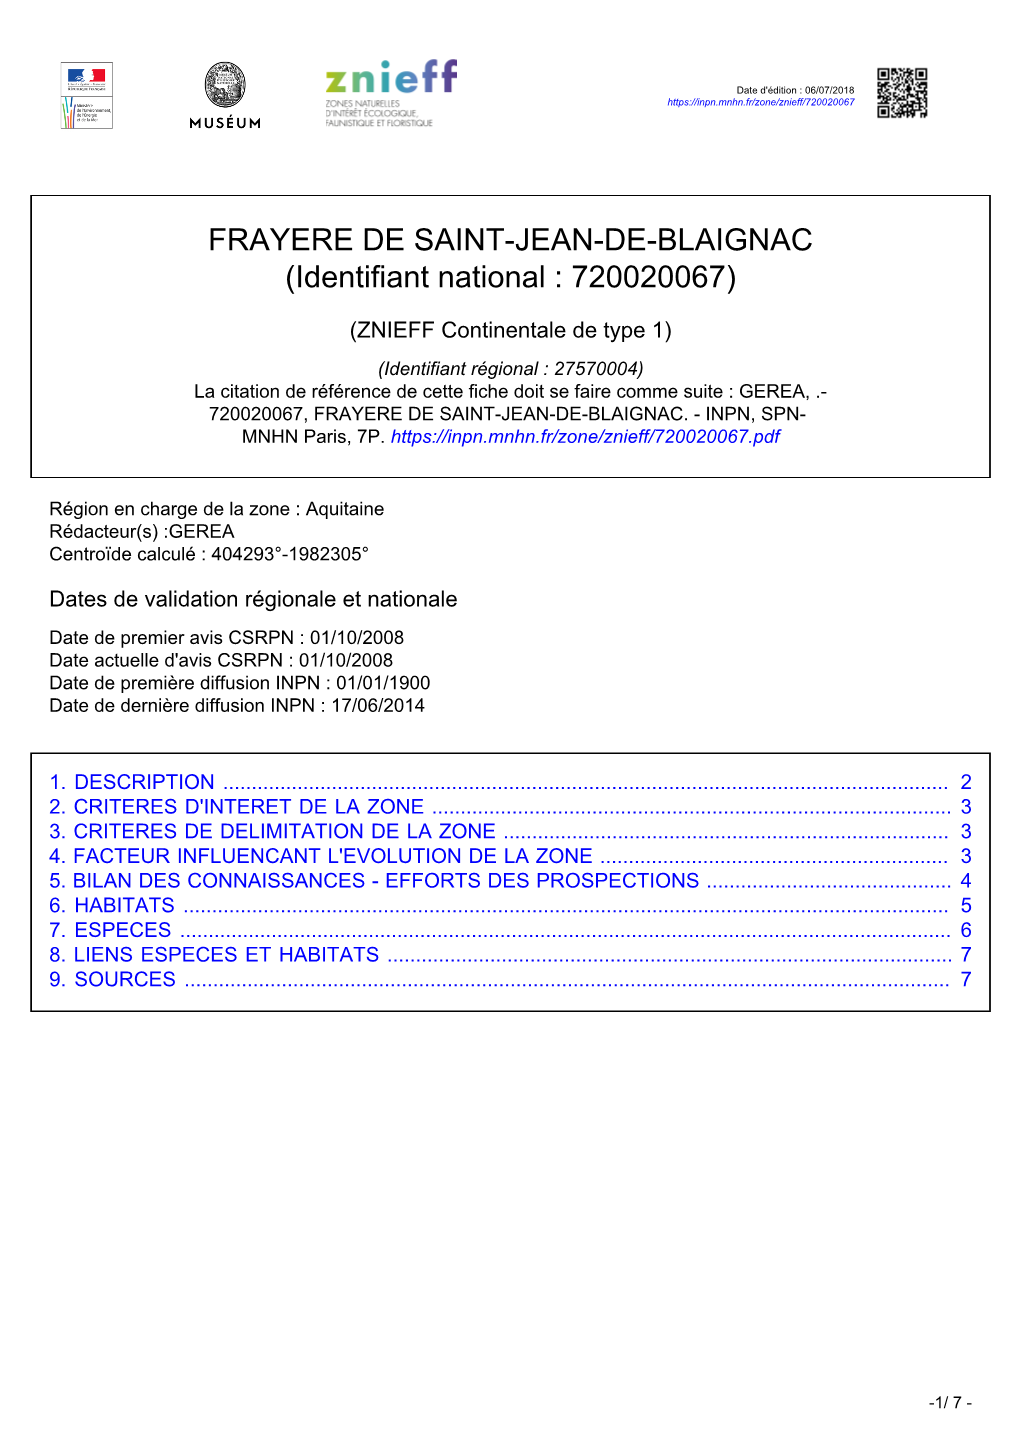 FRAYERE DE SAINT-JEAN-DE-BLAIGNAC (Identifiant National : 720020067)